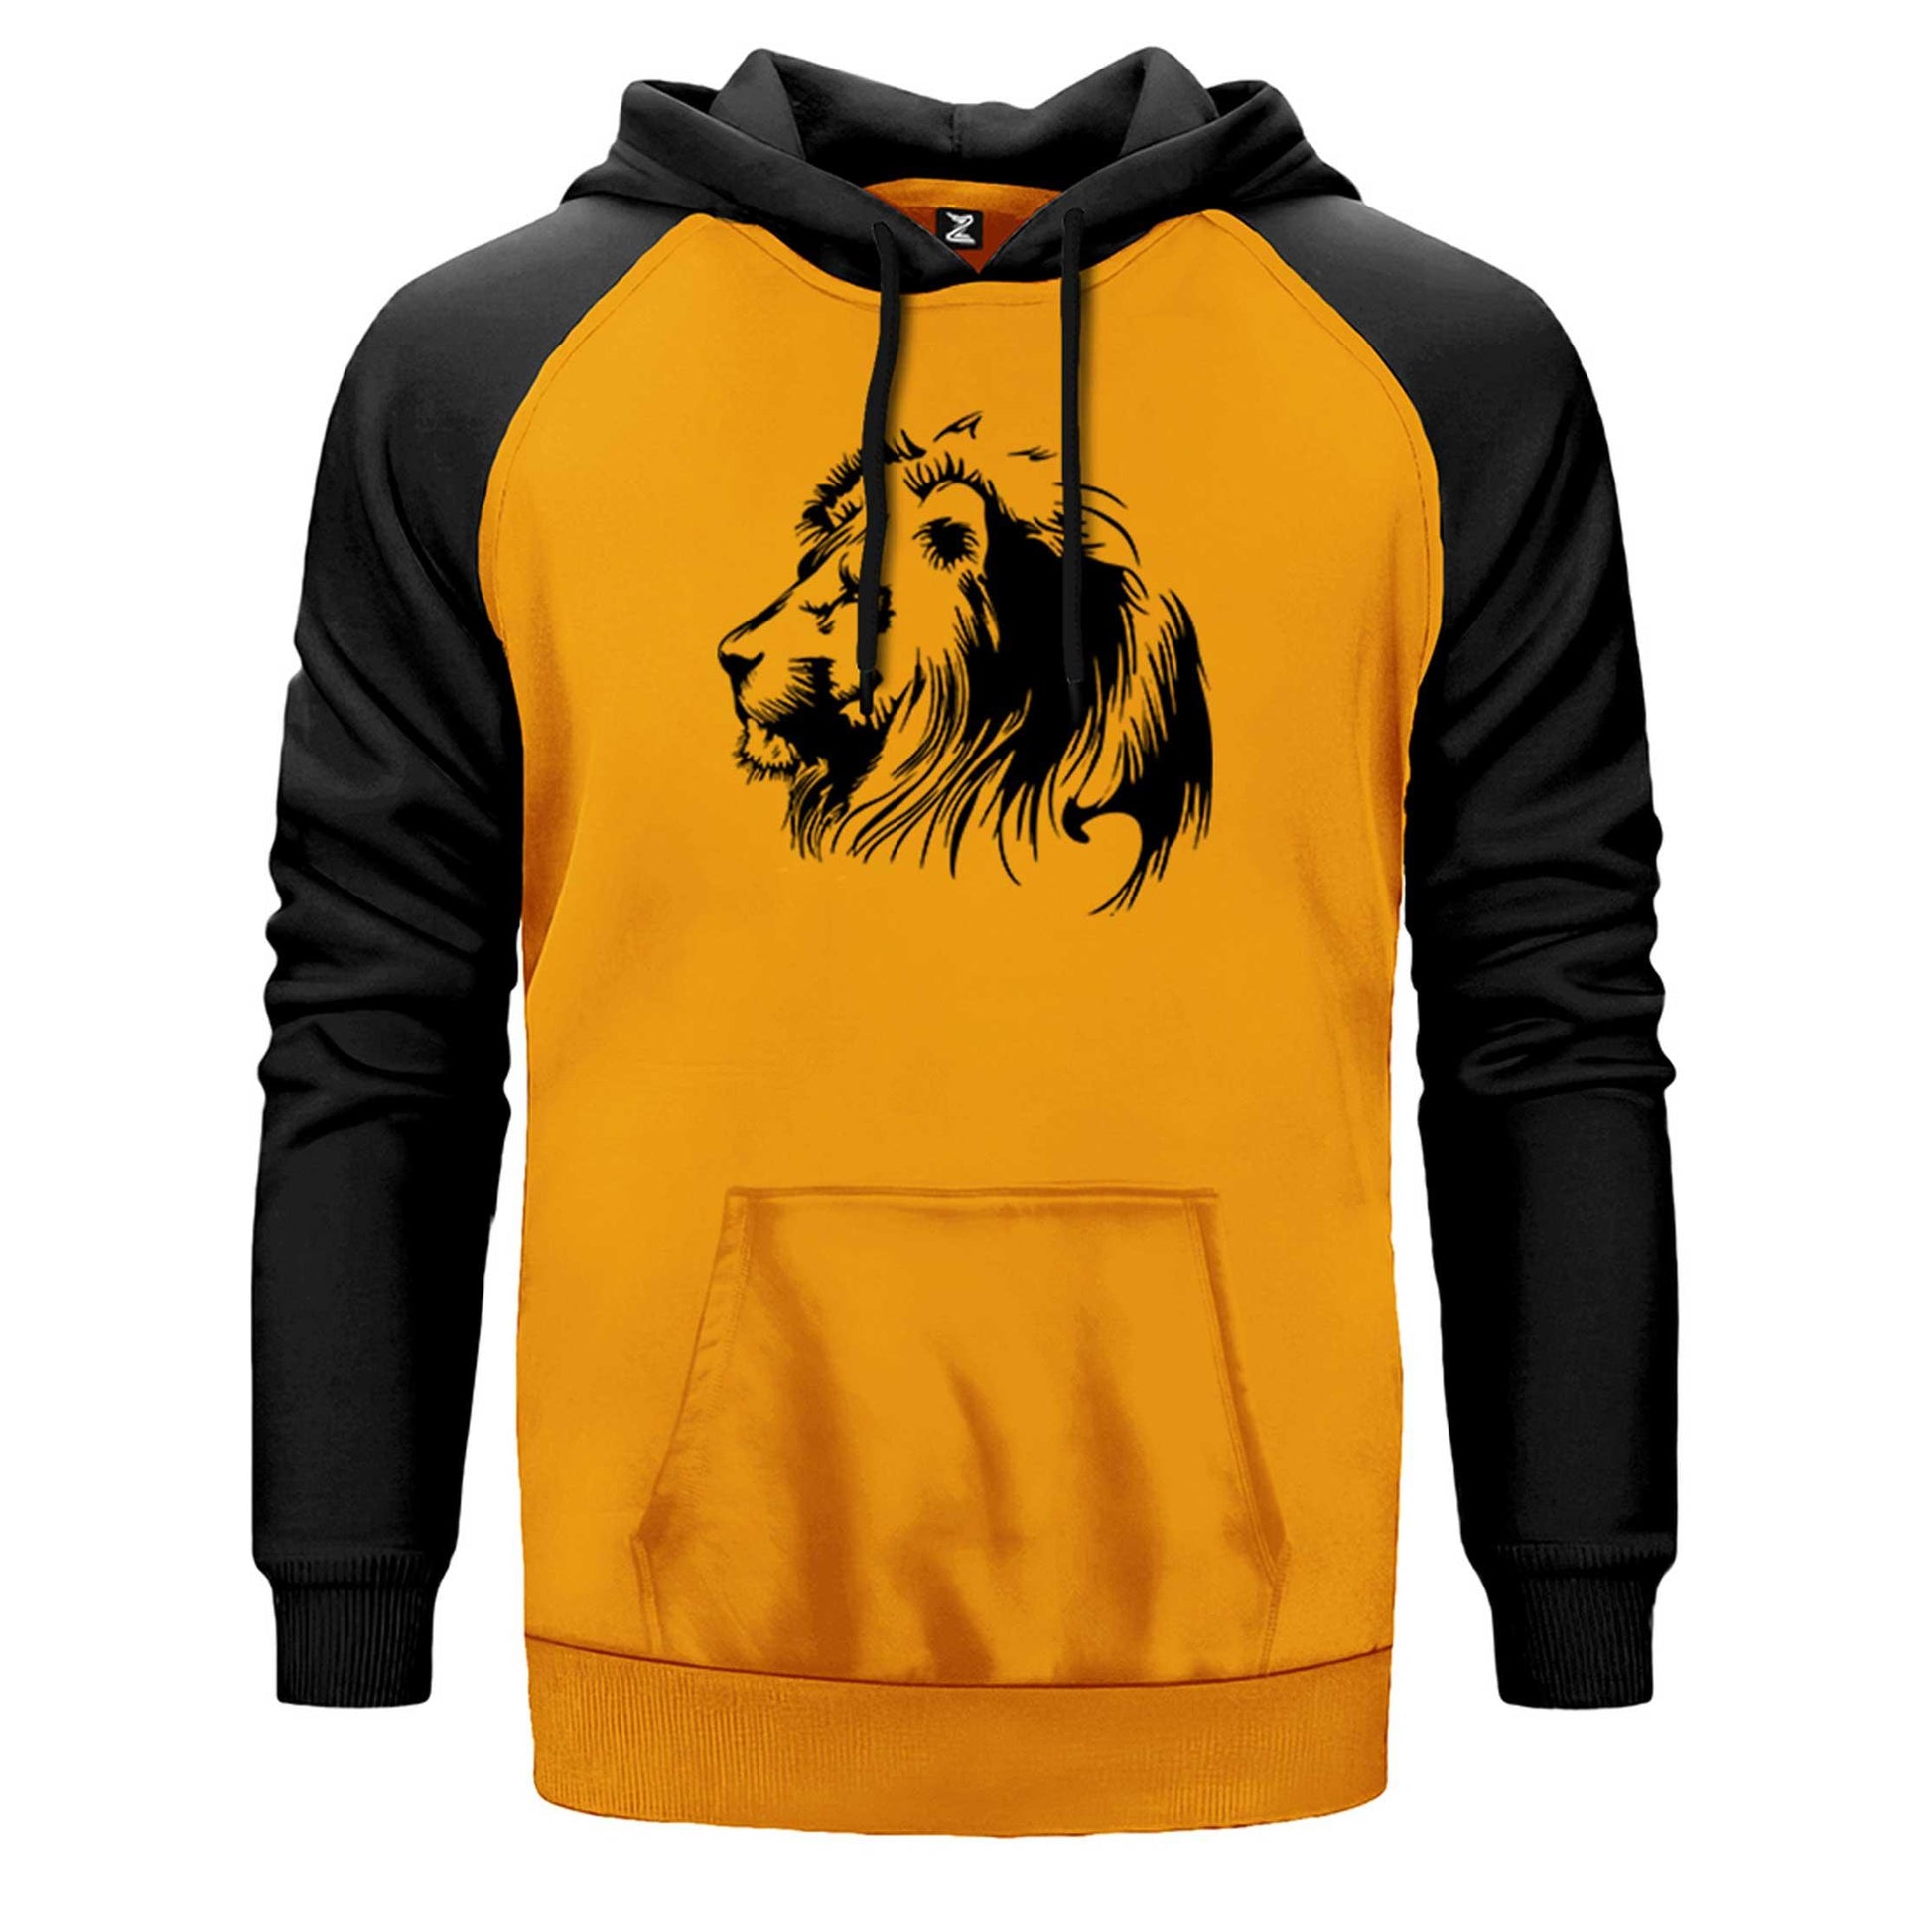 Black Lion Silhouette Çift Renk Reglan Kol Sweatshirt - Zepplingiyim